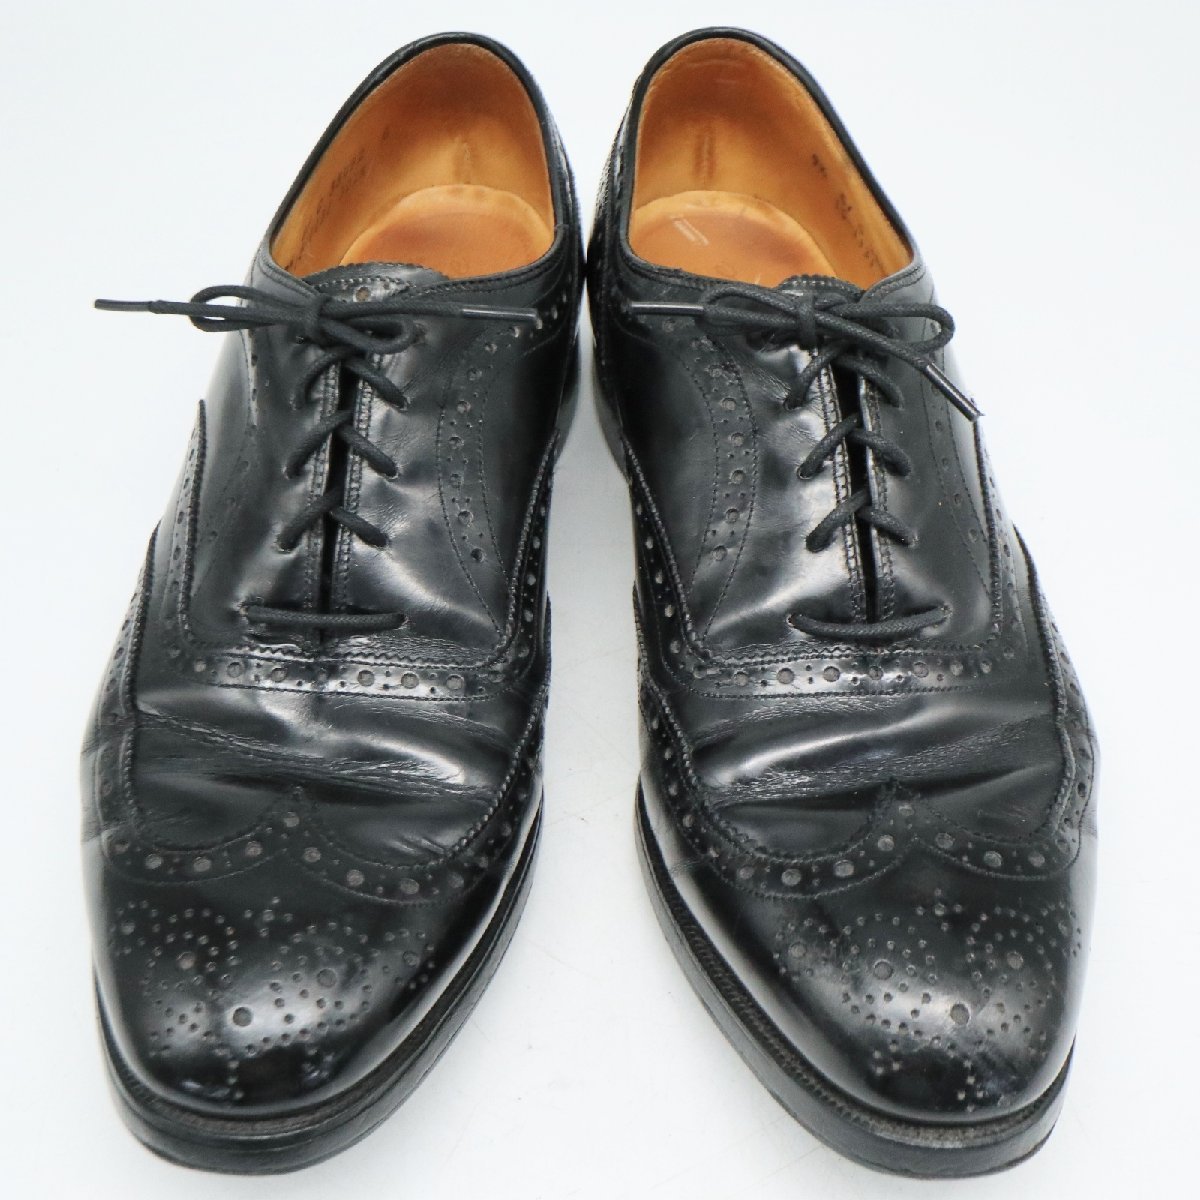 USA製 Johnston&Murphy 内羽根式 ウィングチップ 革靴 レザーシューズ ブラック ( メンズ 9 1/2 E ≒ 27.5cm ) 中古 古着 KA0169